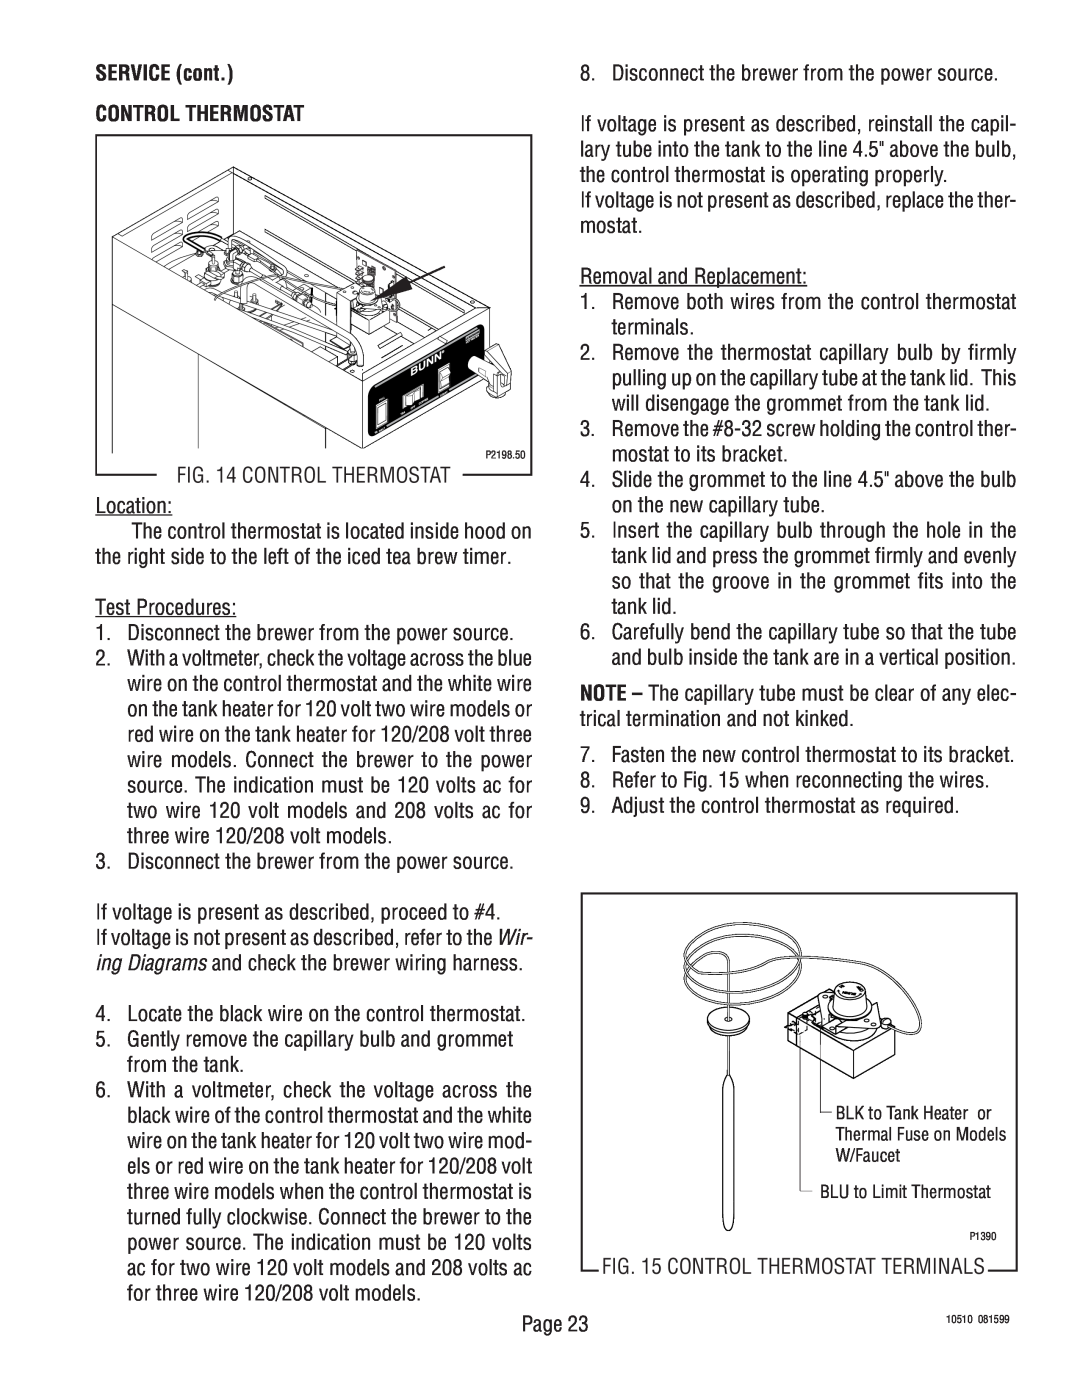 Bunn TWF service manual SERVICE cont, Control Thermostat 